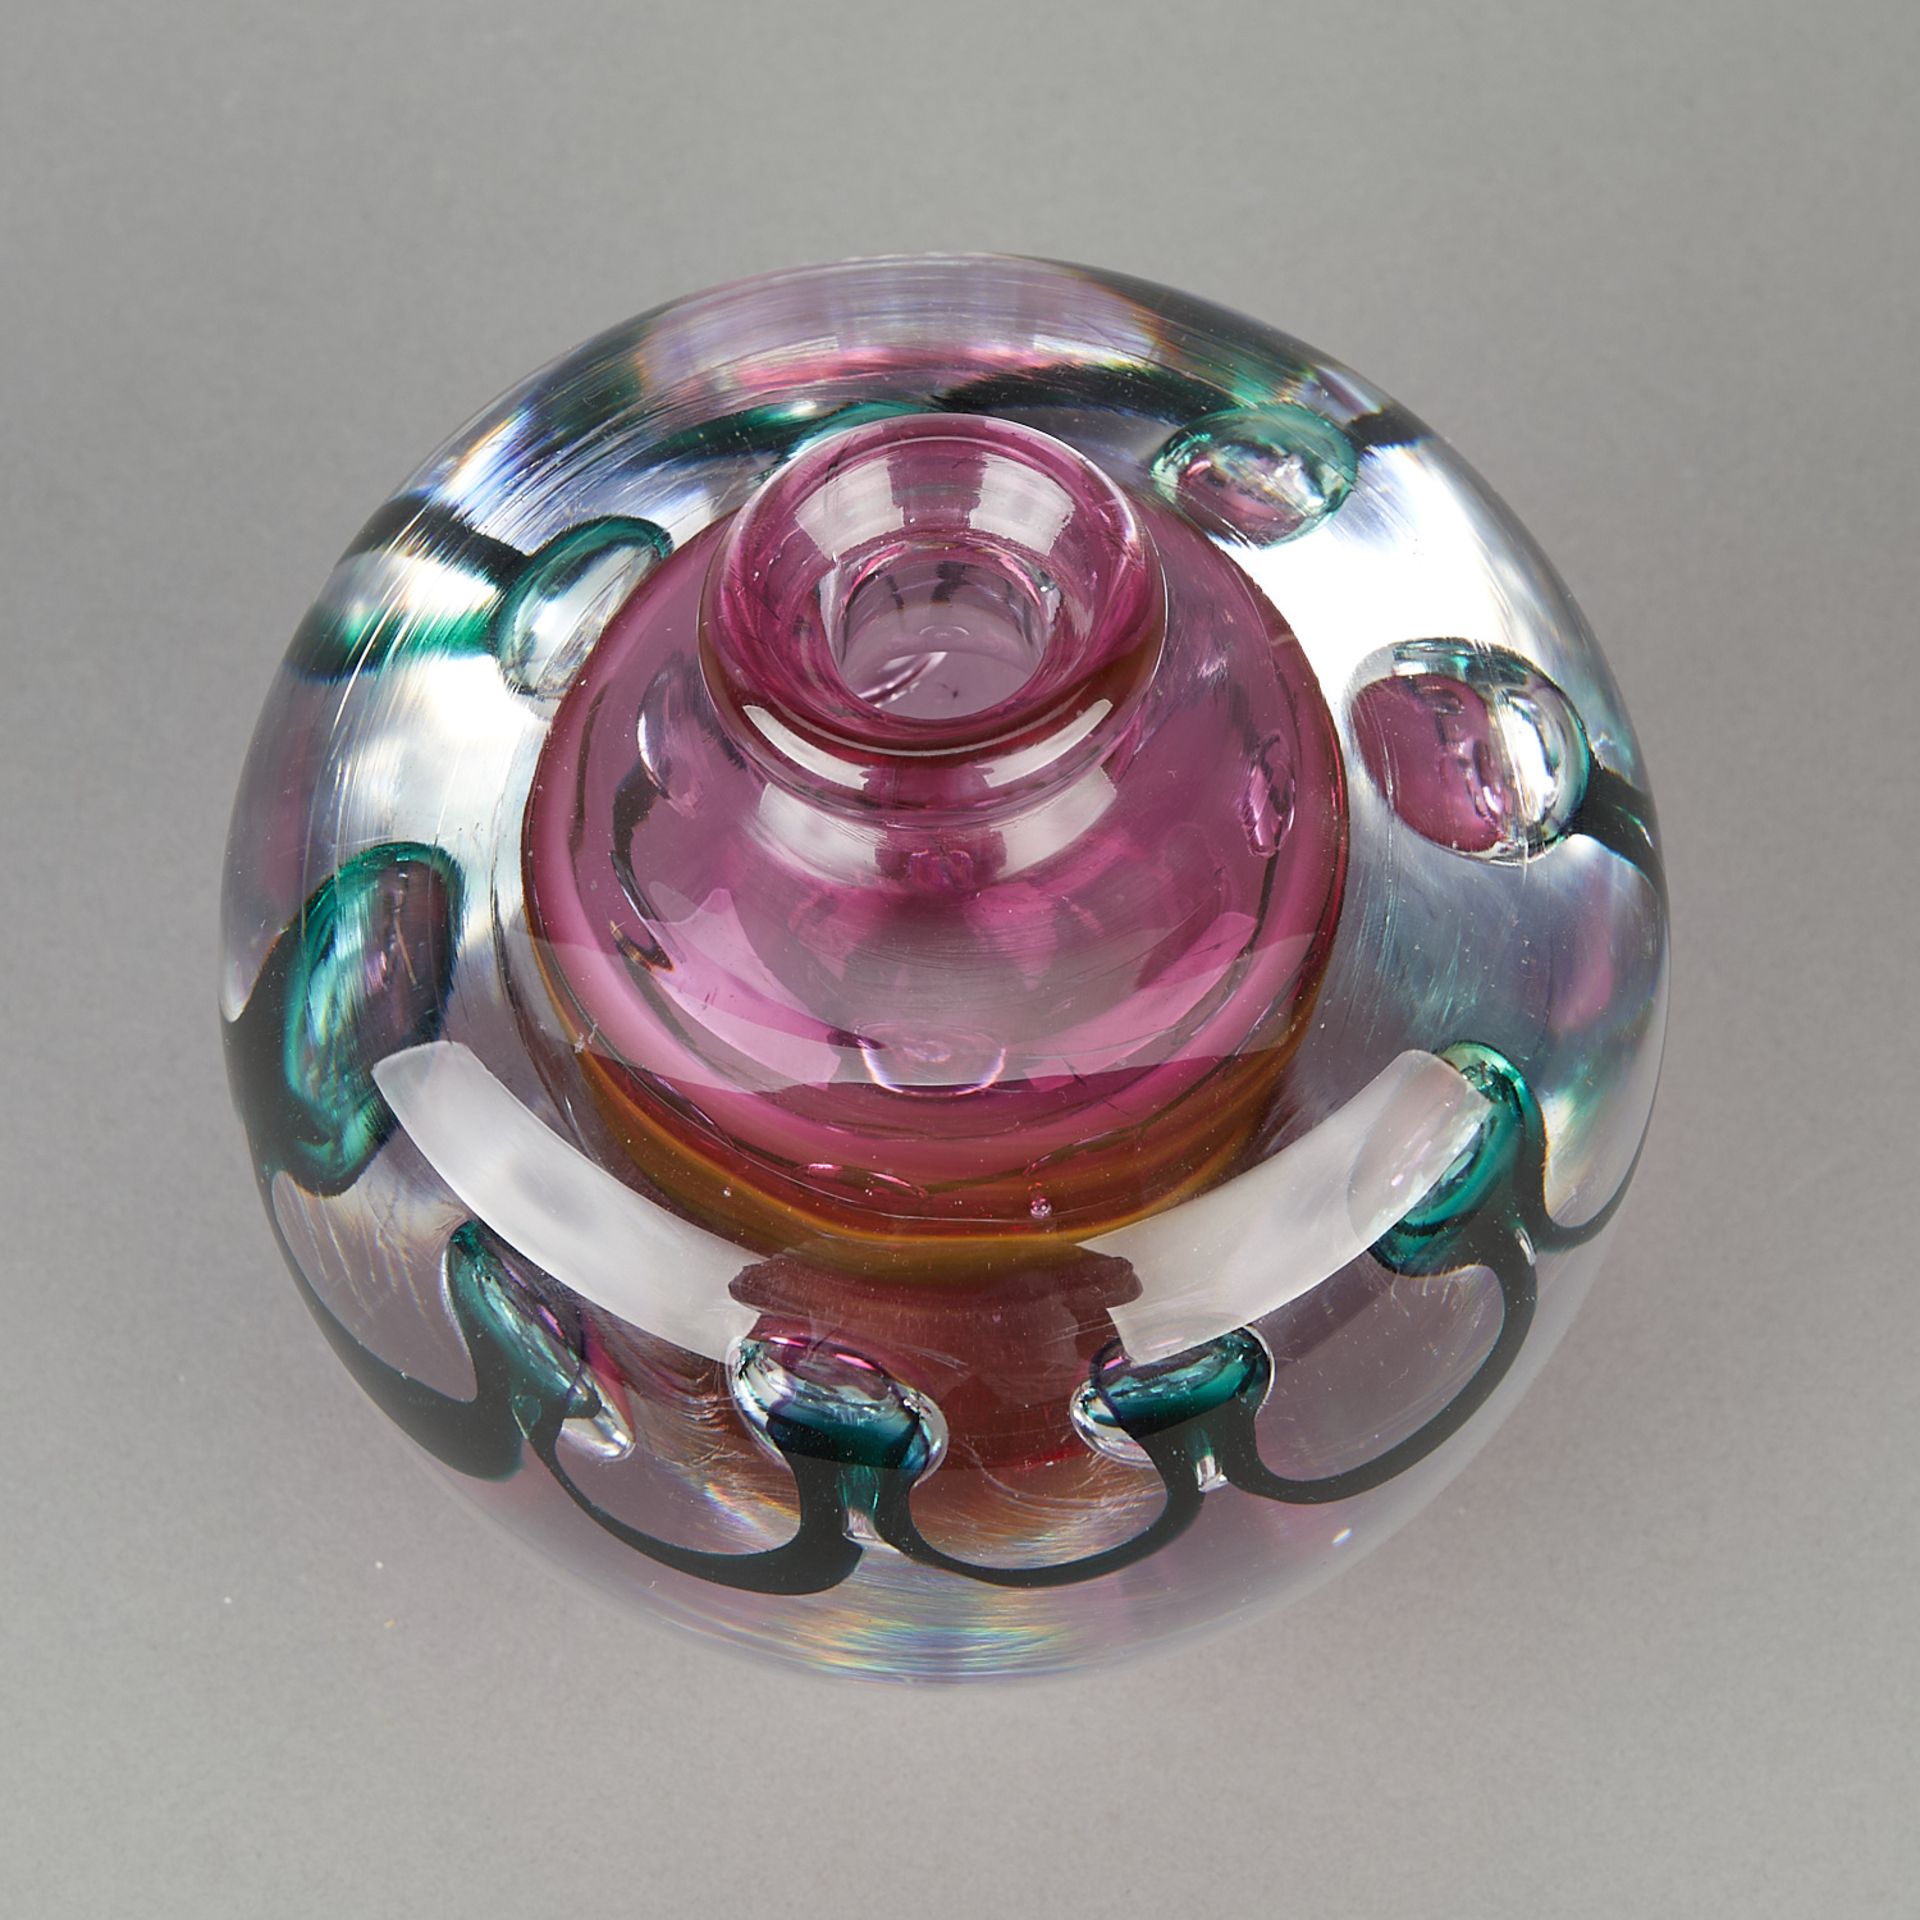 Jean-Claude Novaro Handblown Glass Vase 2000 - Image 2 of 8